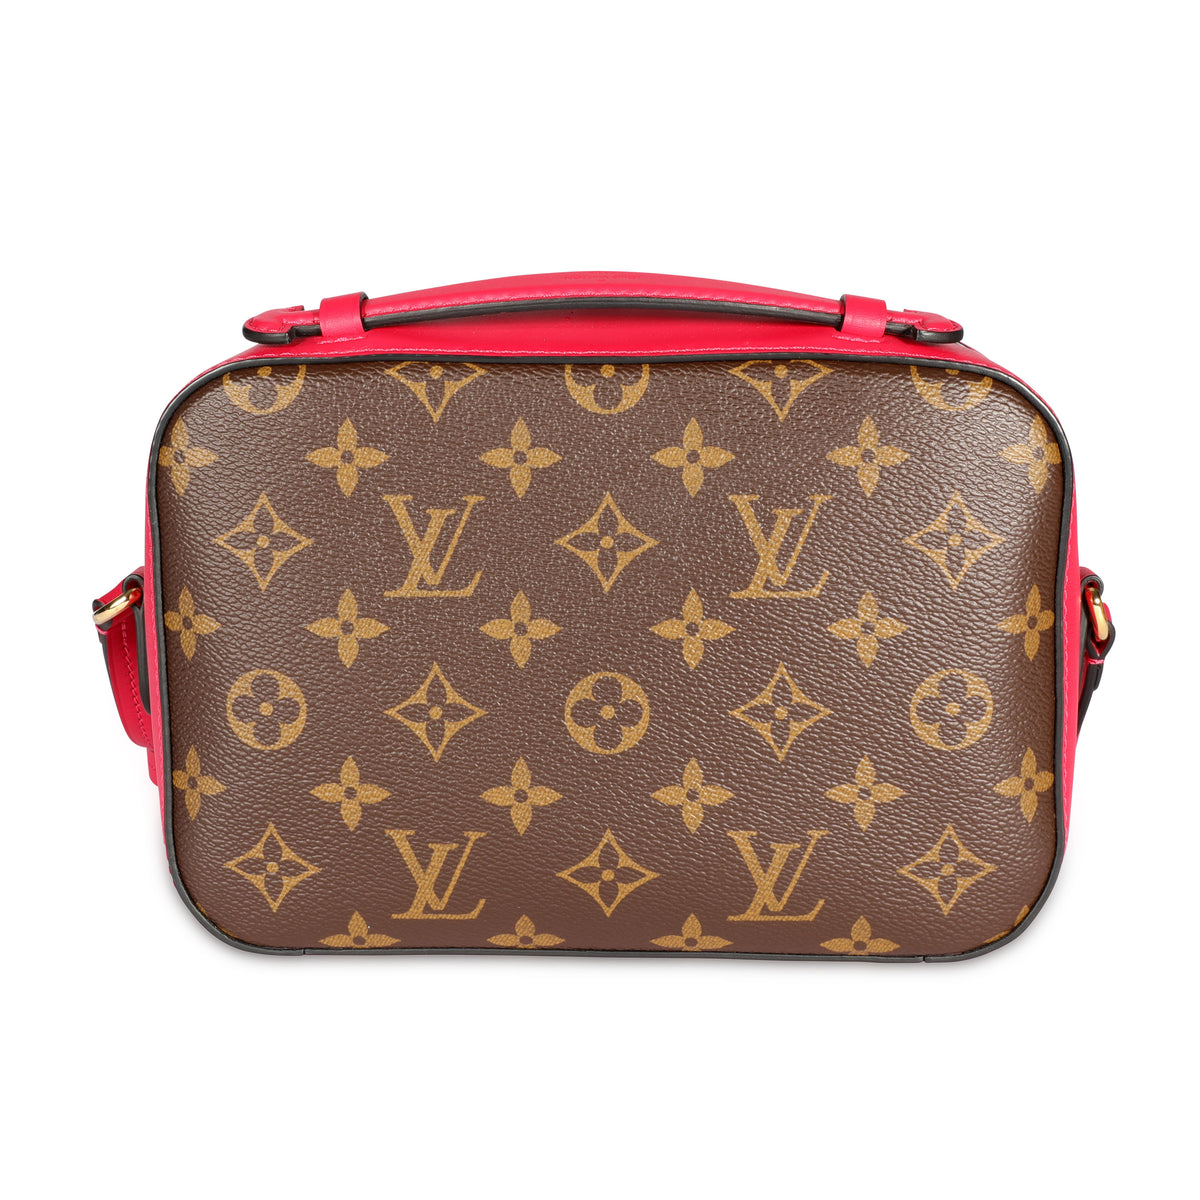 Louis Vuitton Saintonge Bag Reviewed